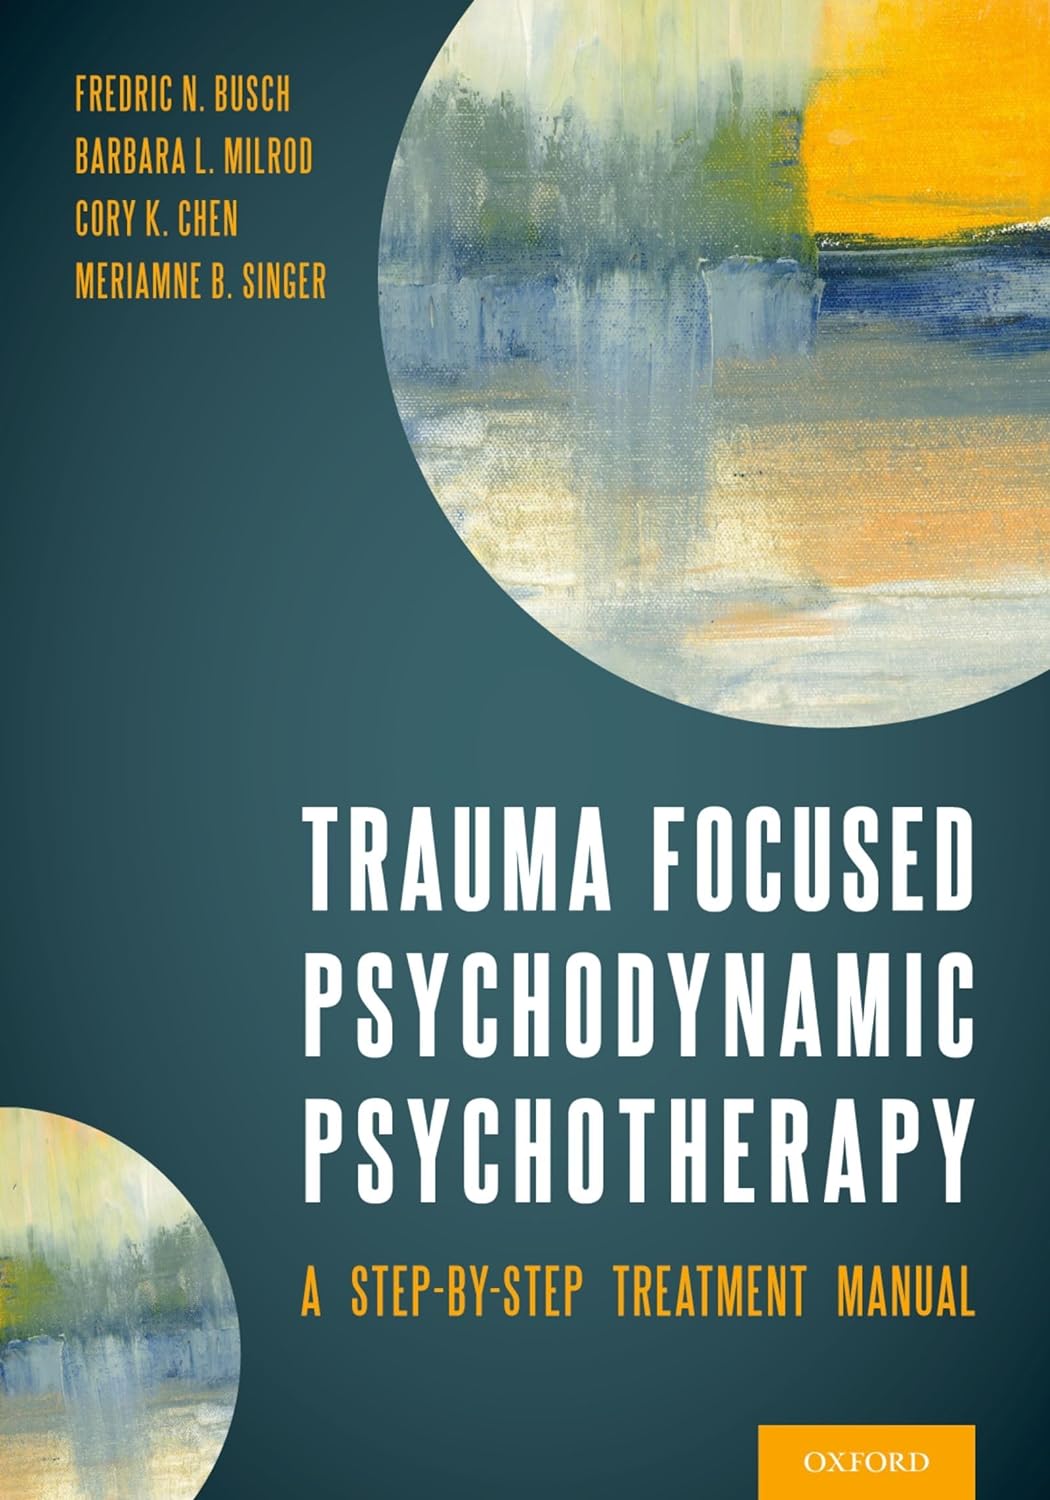 Trauma focused psychodynamic psychotherapy : a step-by-step treatment manual